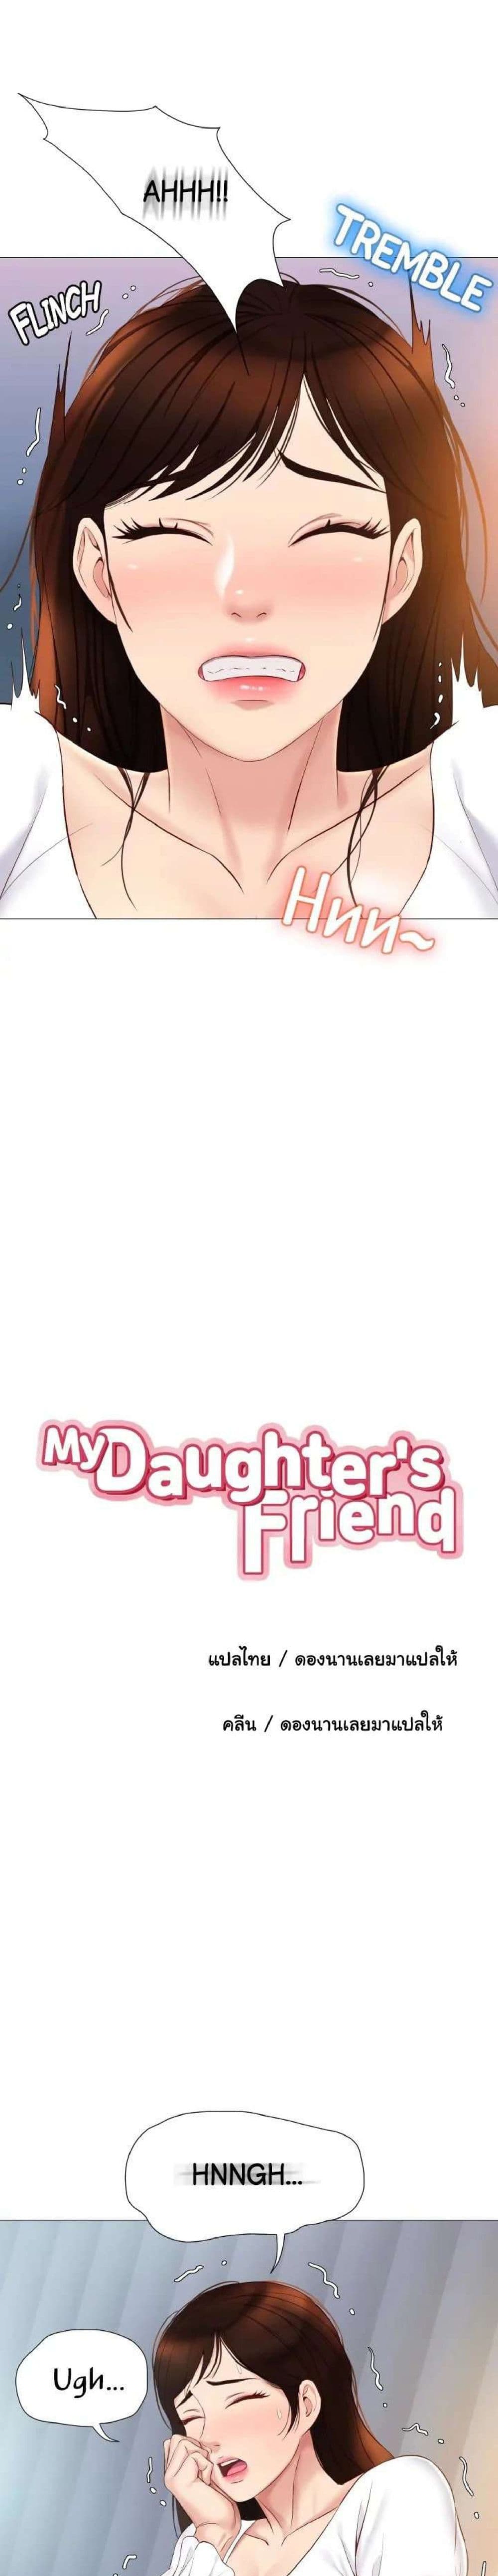 Daughter Friend 33 06